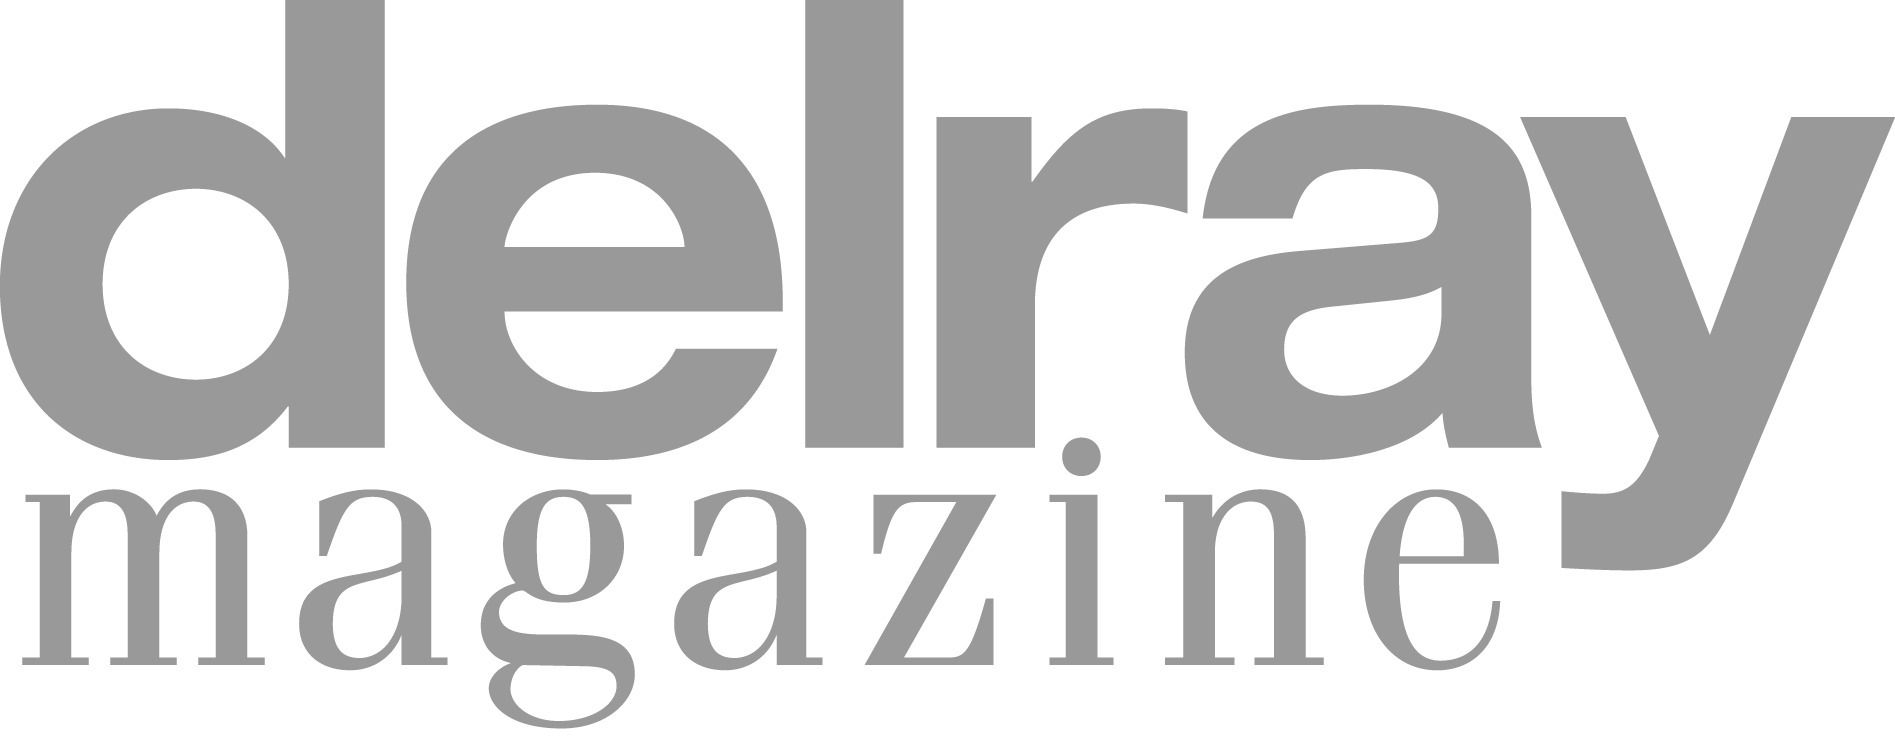 Dealray Logo - Delray Magazine